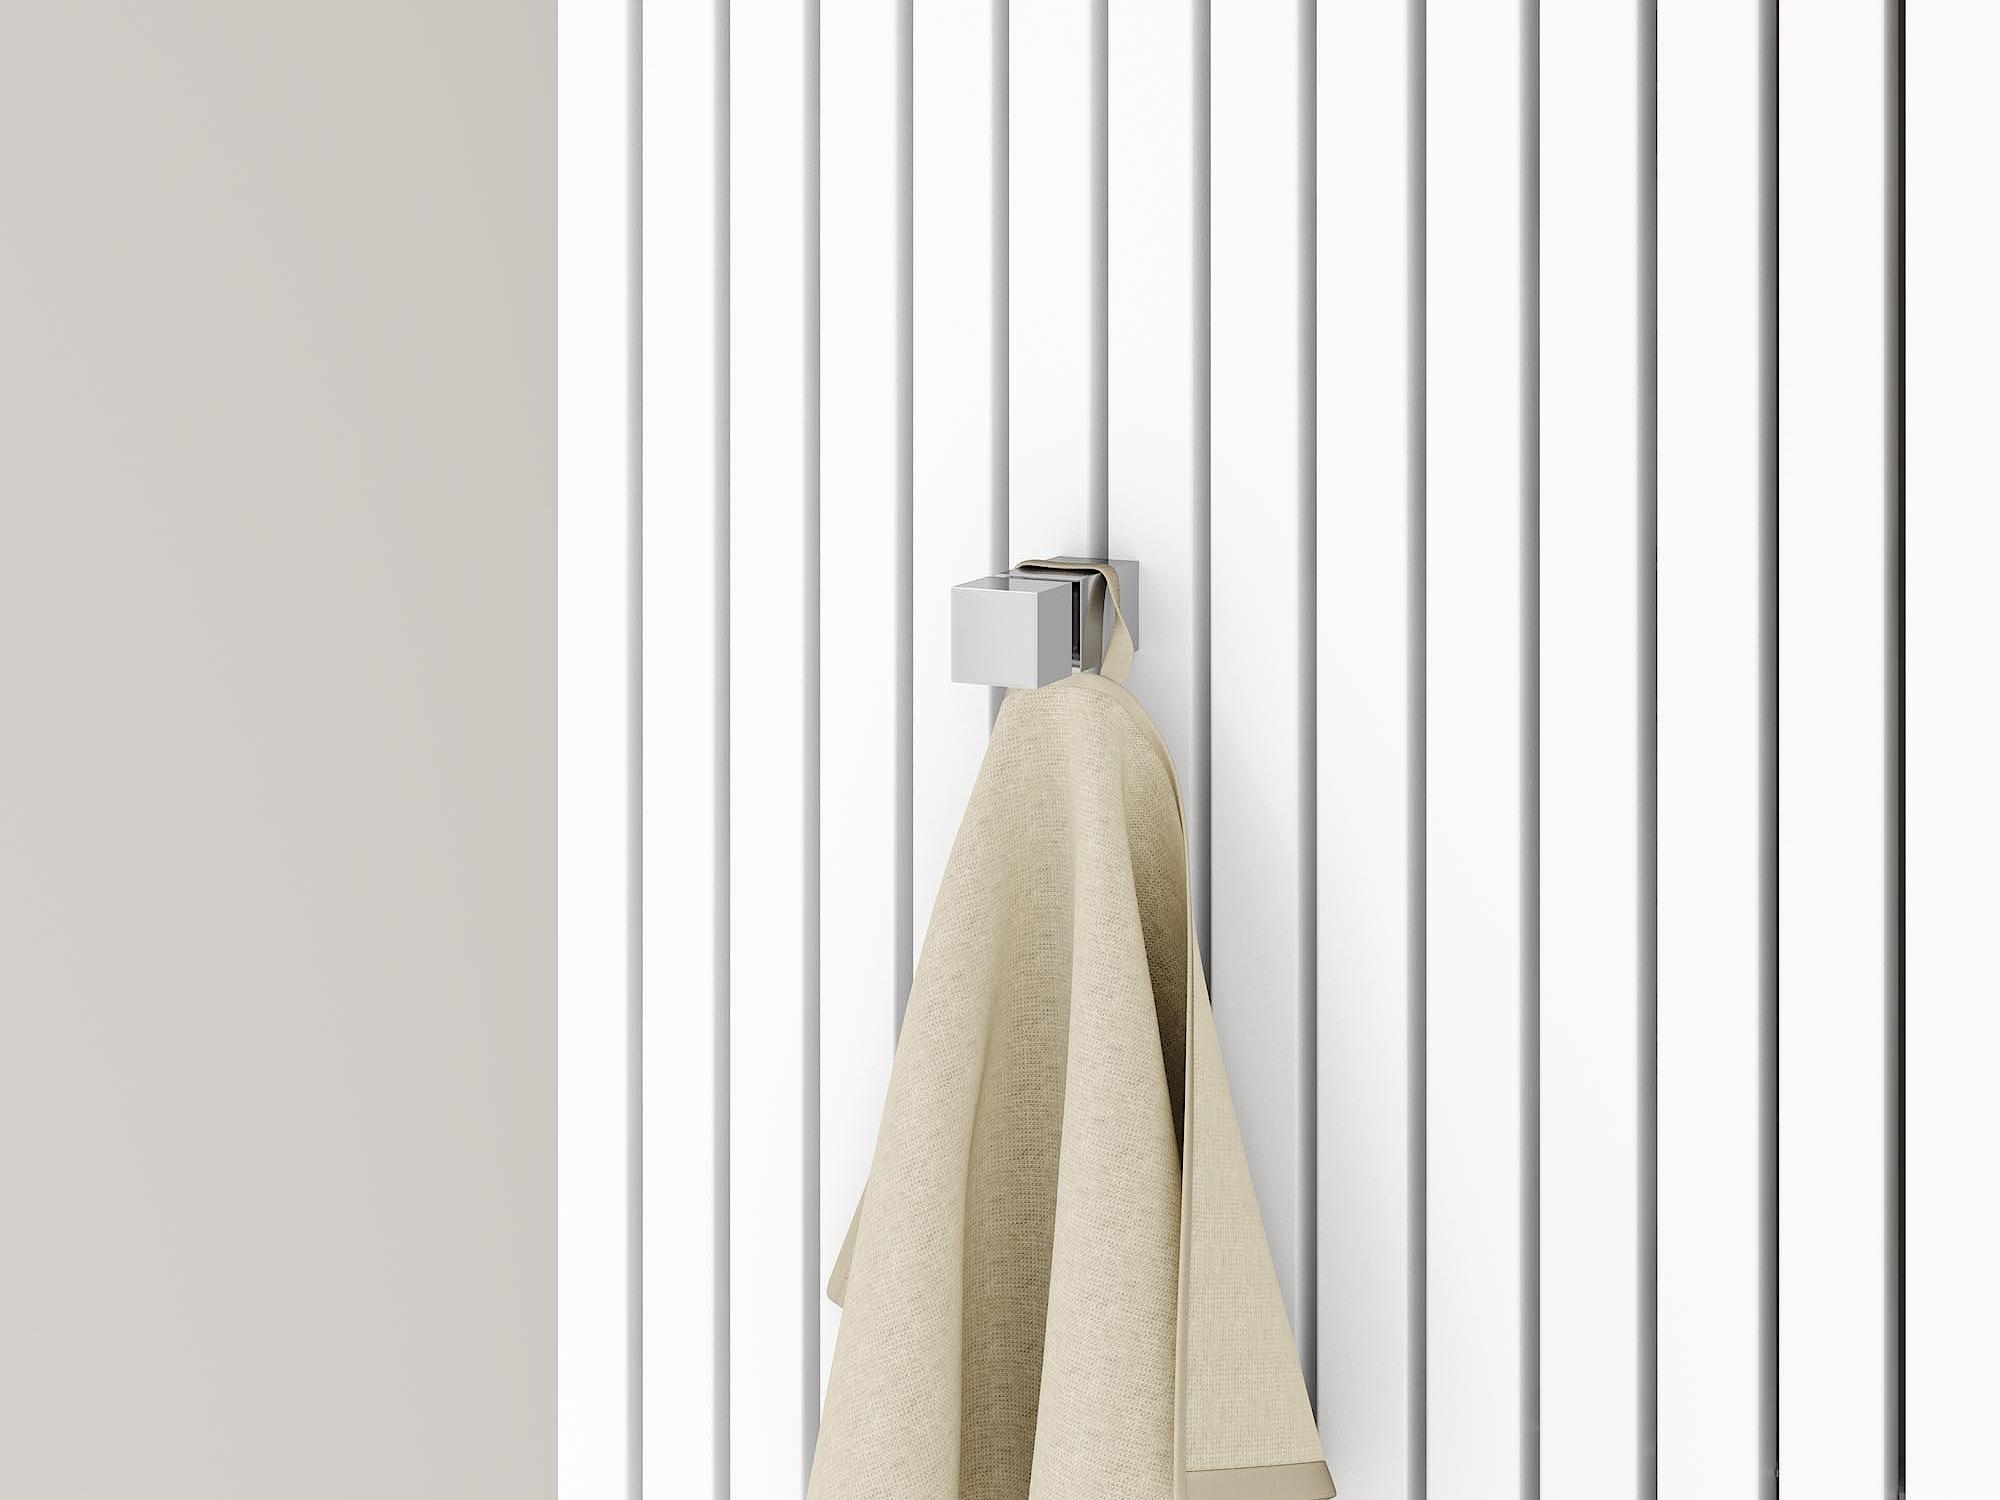 Towel hook for Kermi Decor-Arte Pure design and bathroom radiators.